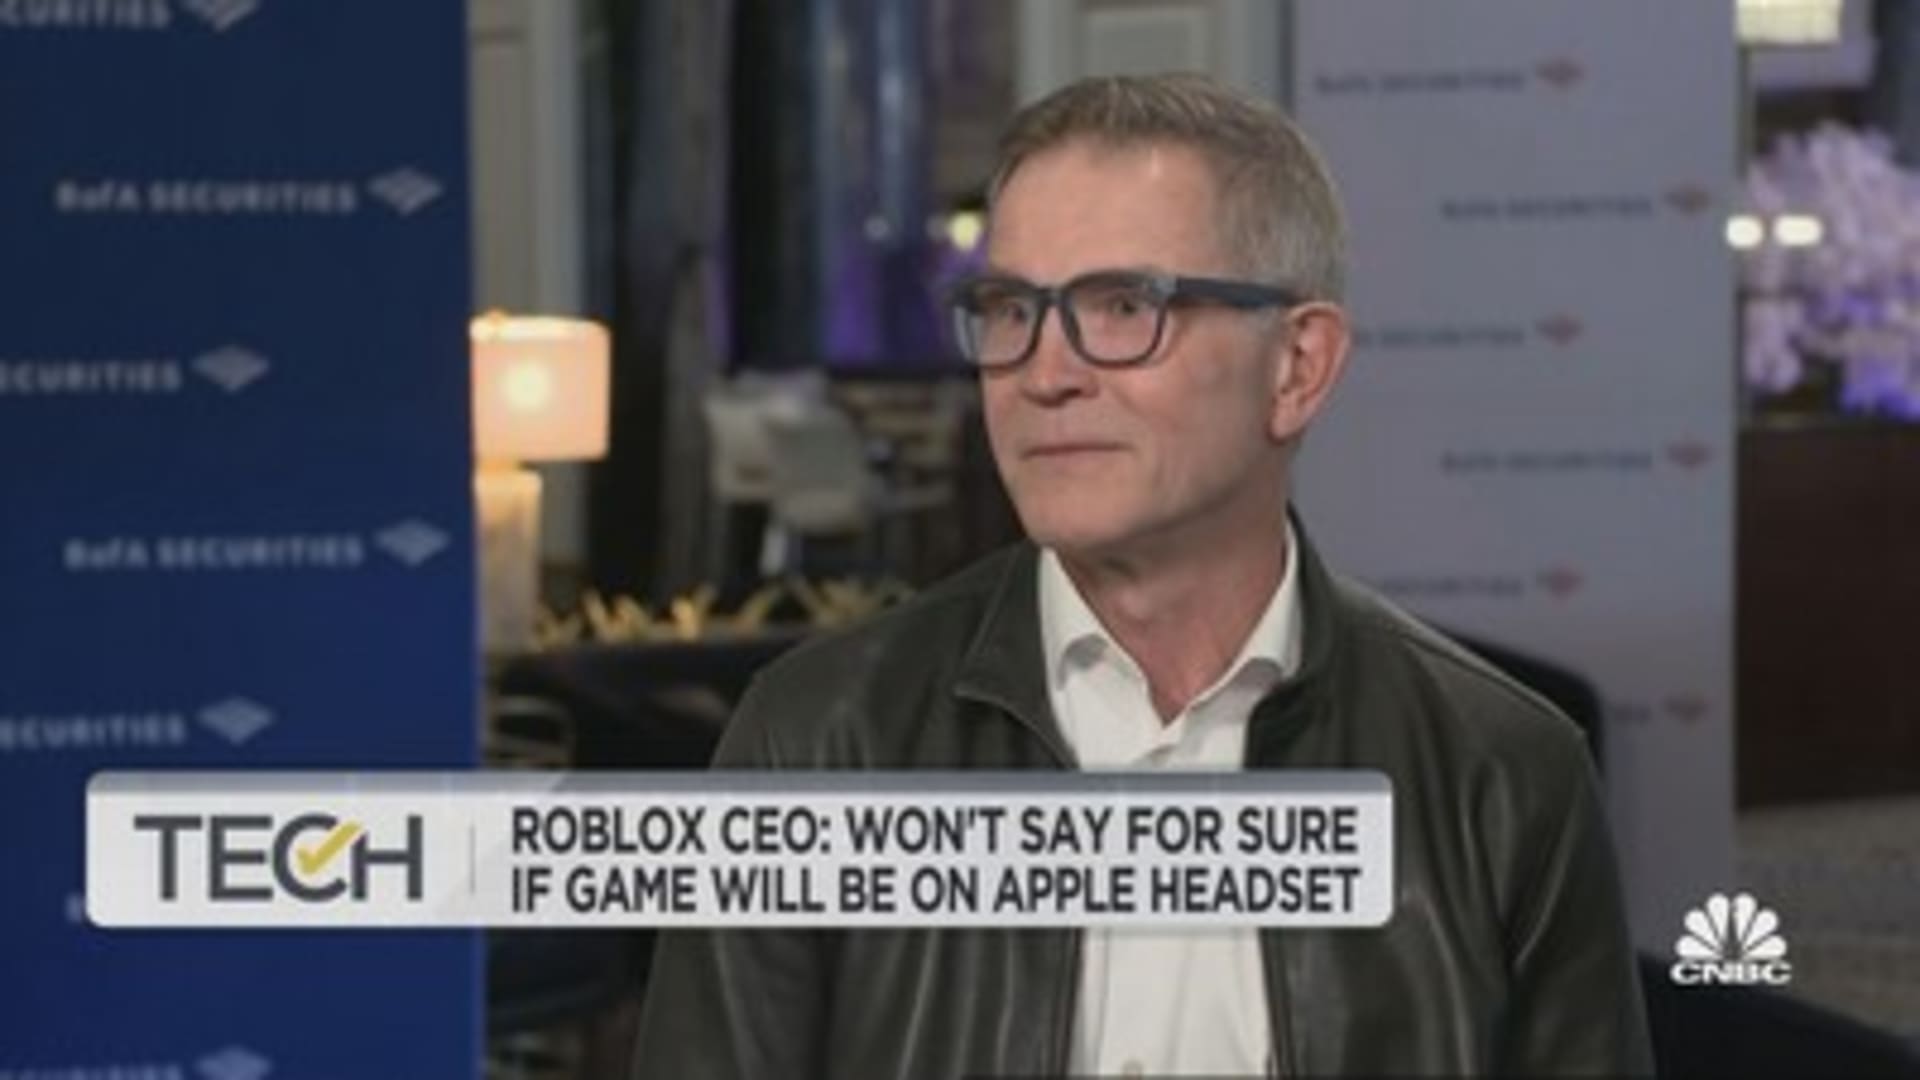 David Baszucki: Co-Founder and CEO of Roblox 